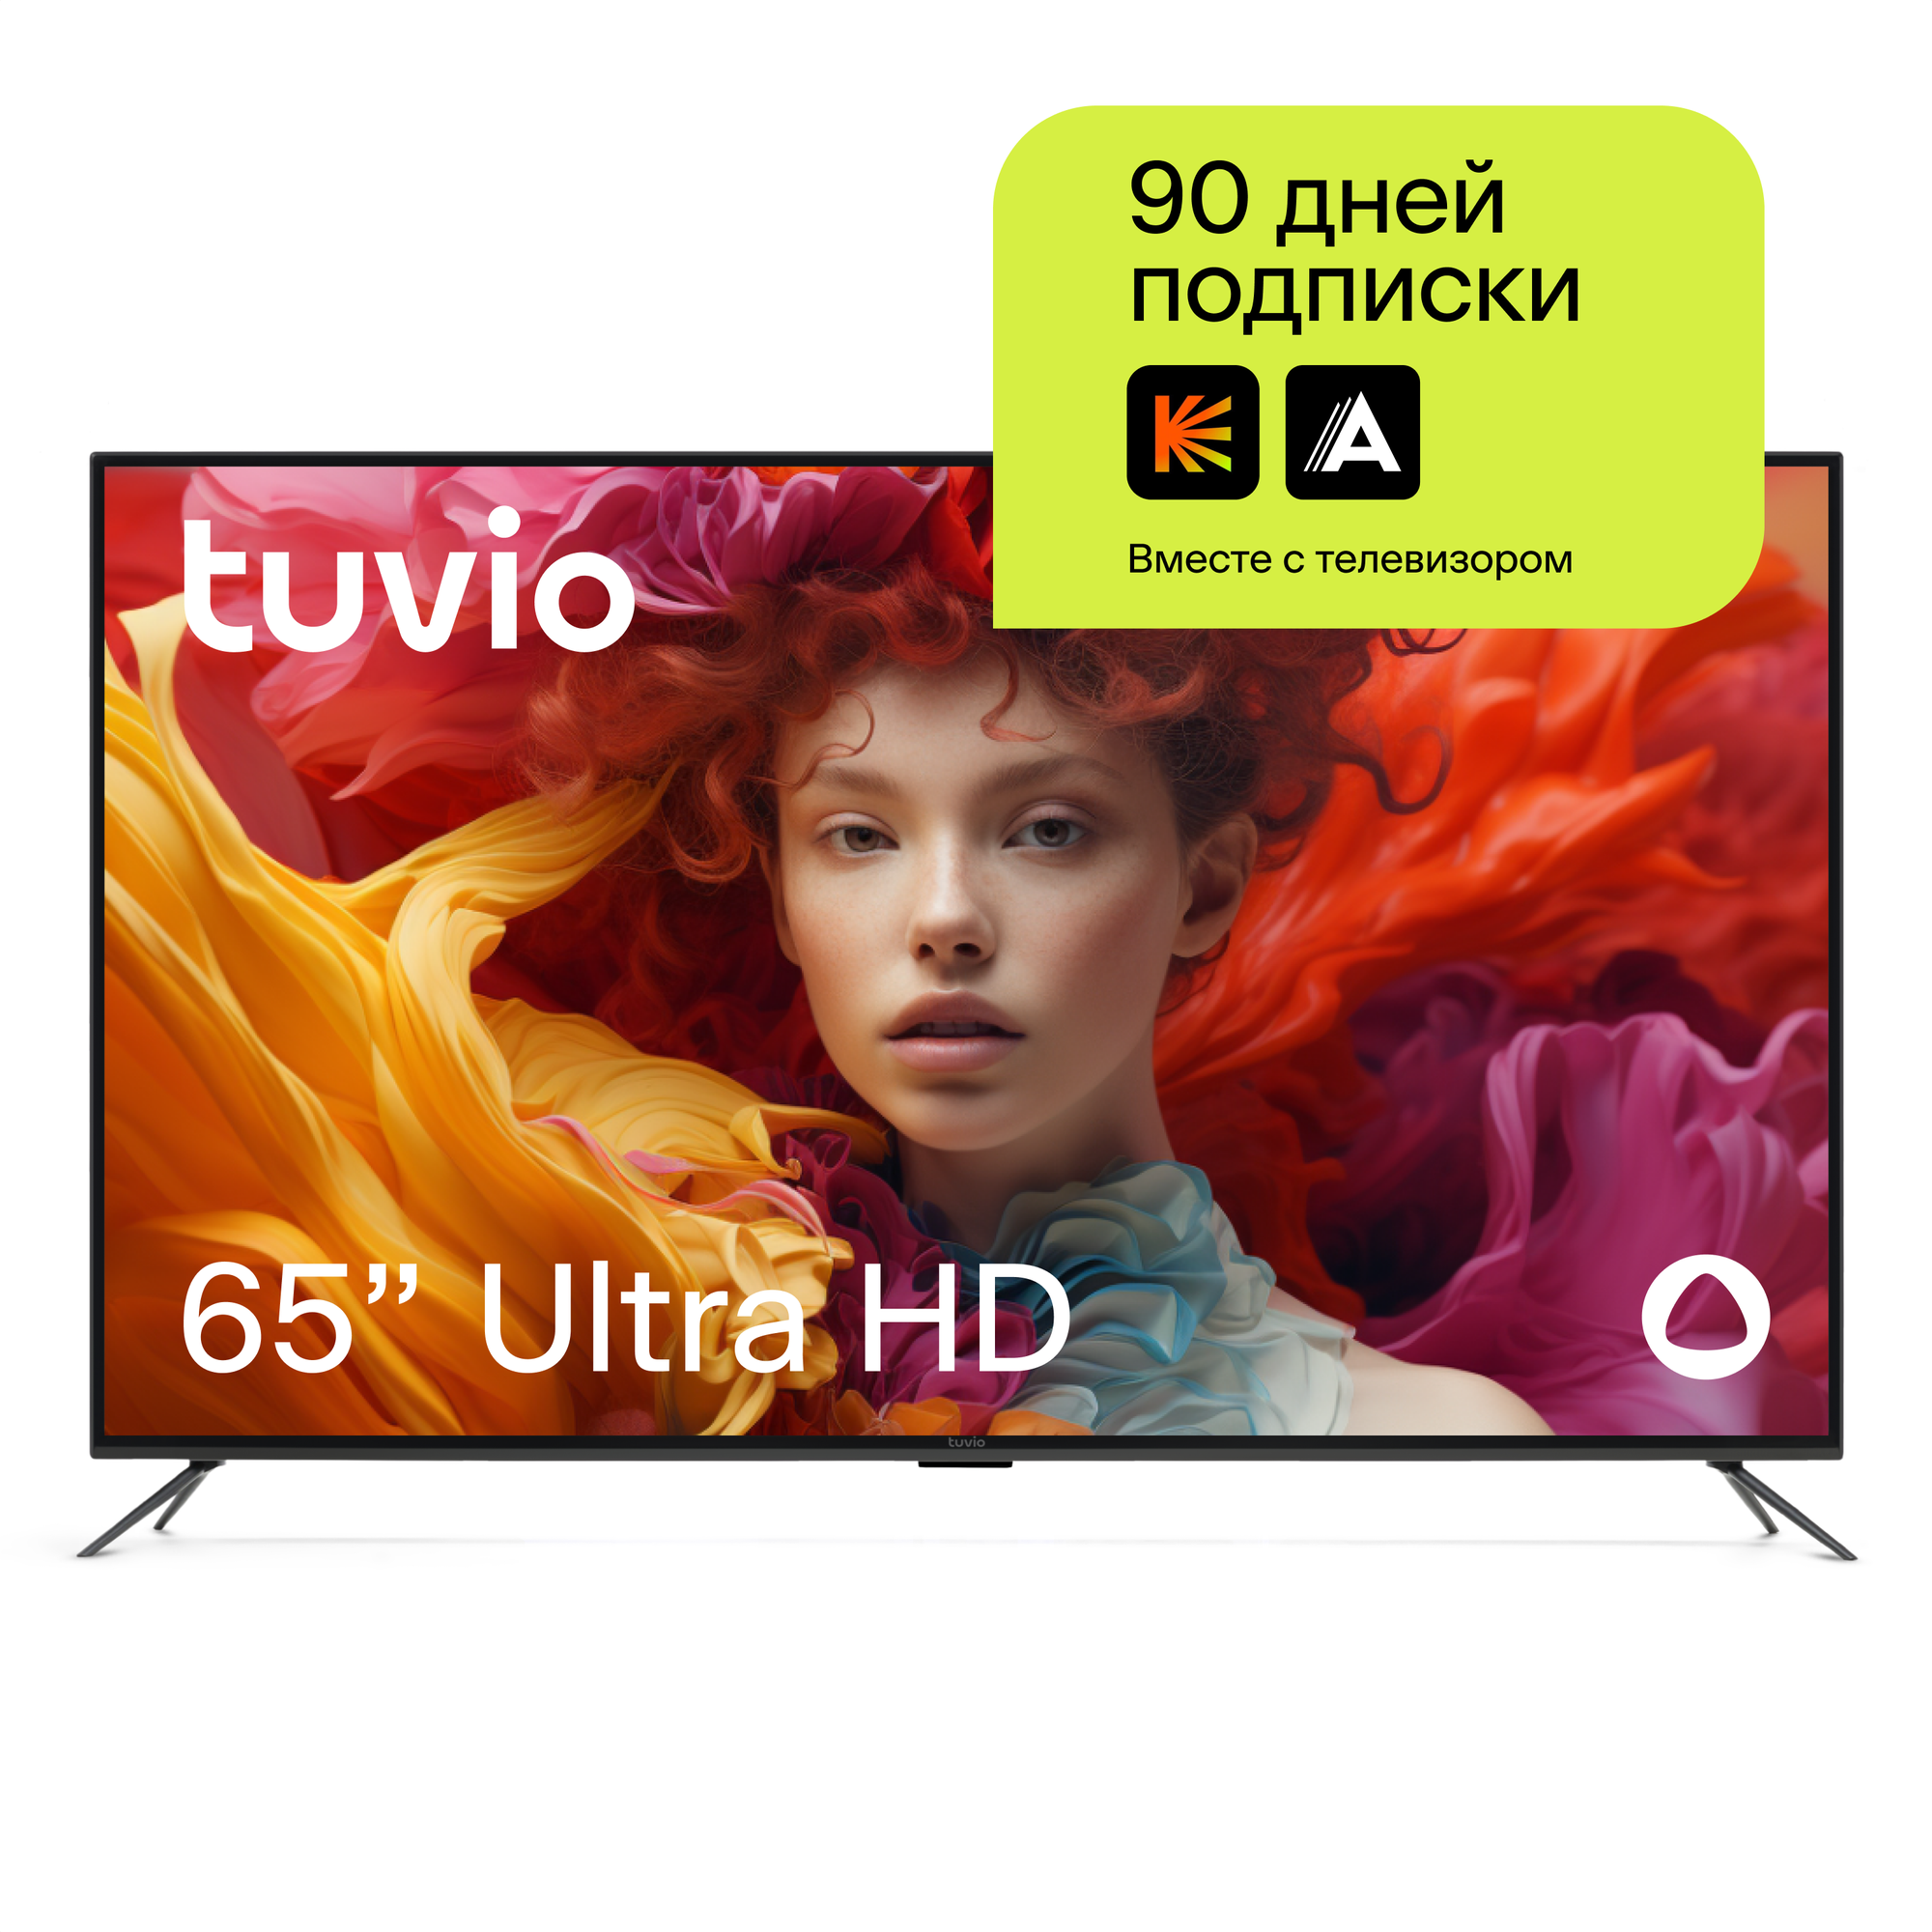 65” Телевизор Tuvio 4K ULTRA HD DLED на платформе Яндекс.ТВ STV-65DUBK1R черный